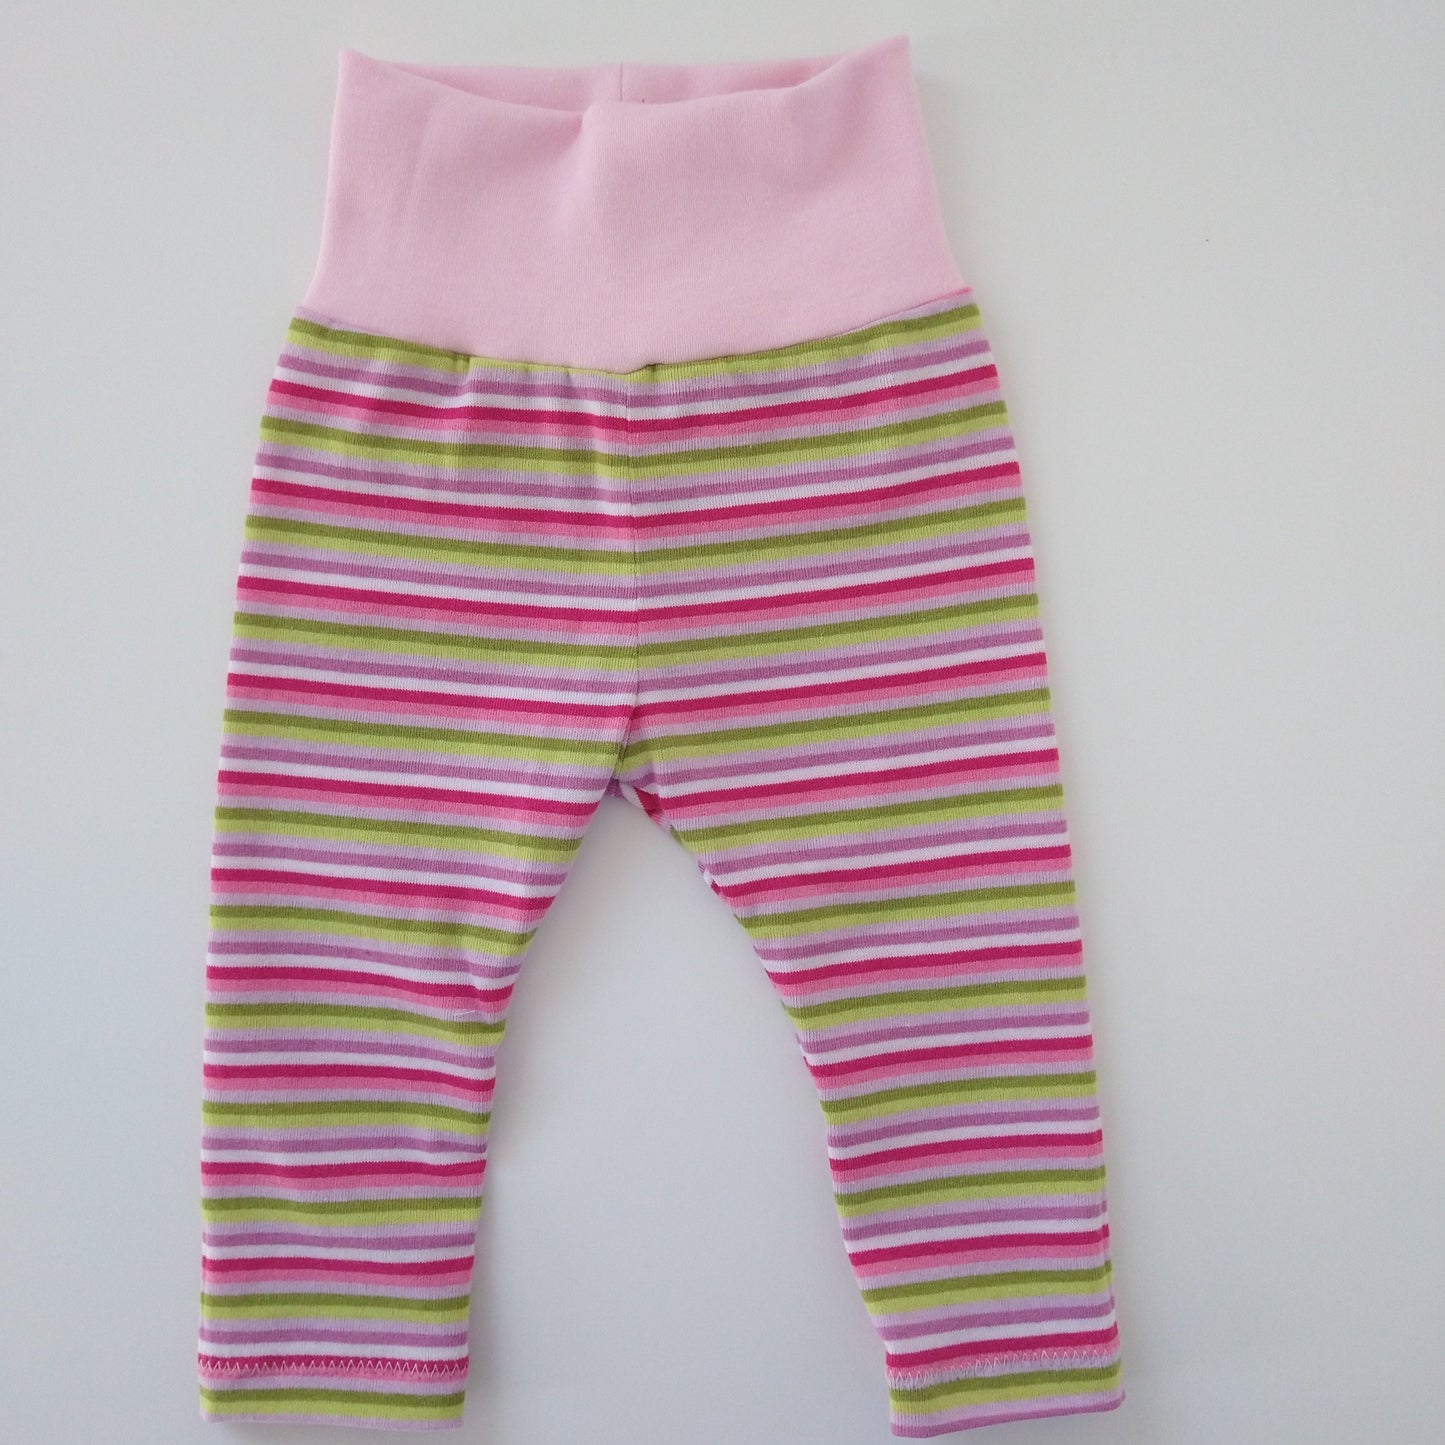 Baby leggings EUR size 68 / US 4-6 months (Handmade in Canada)